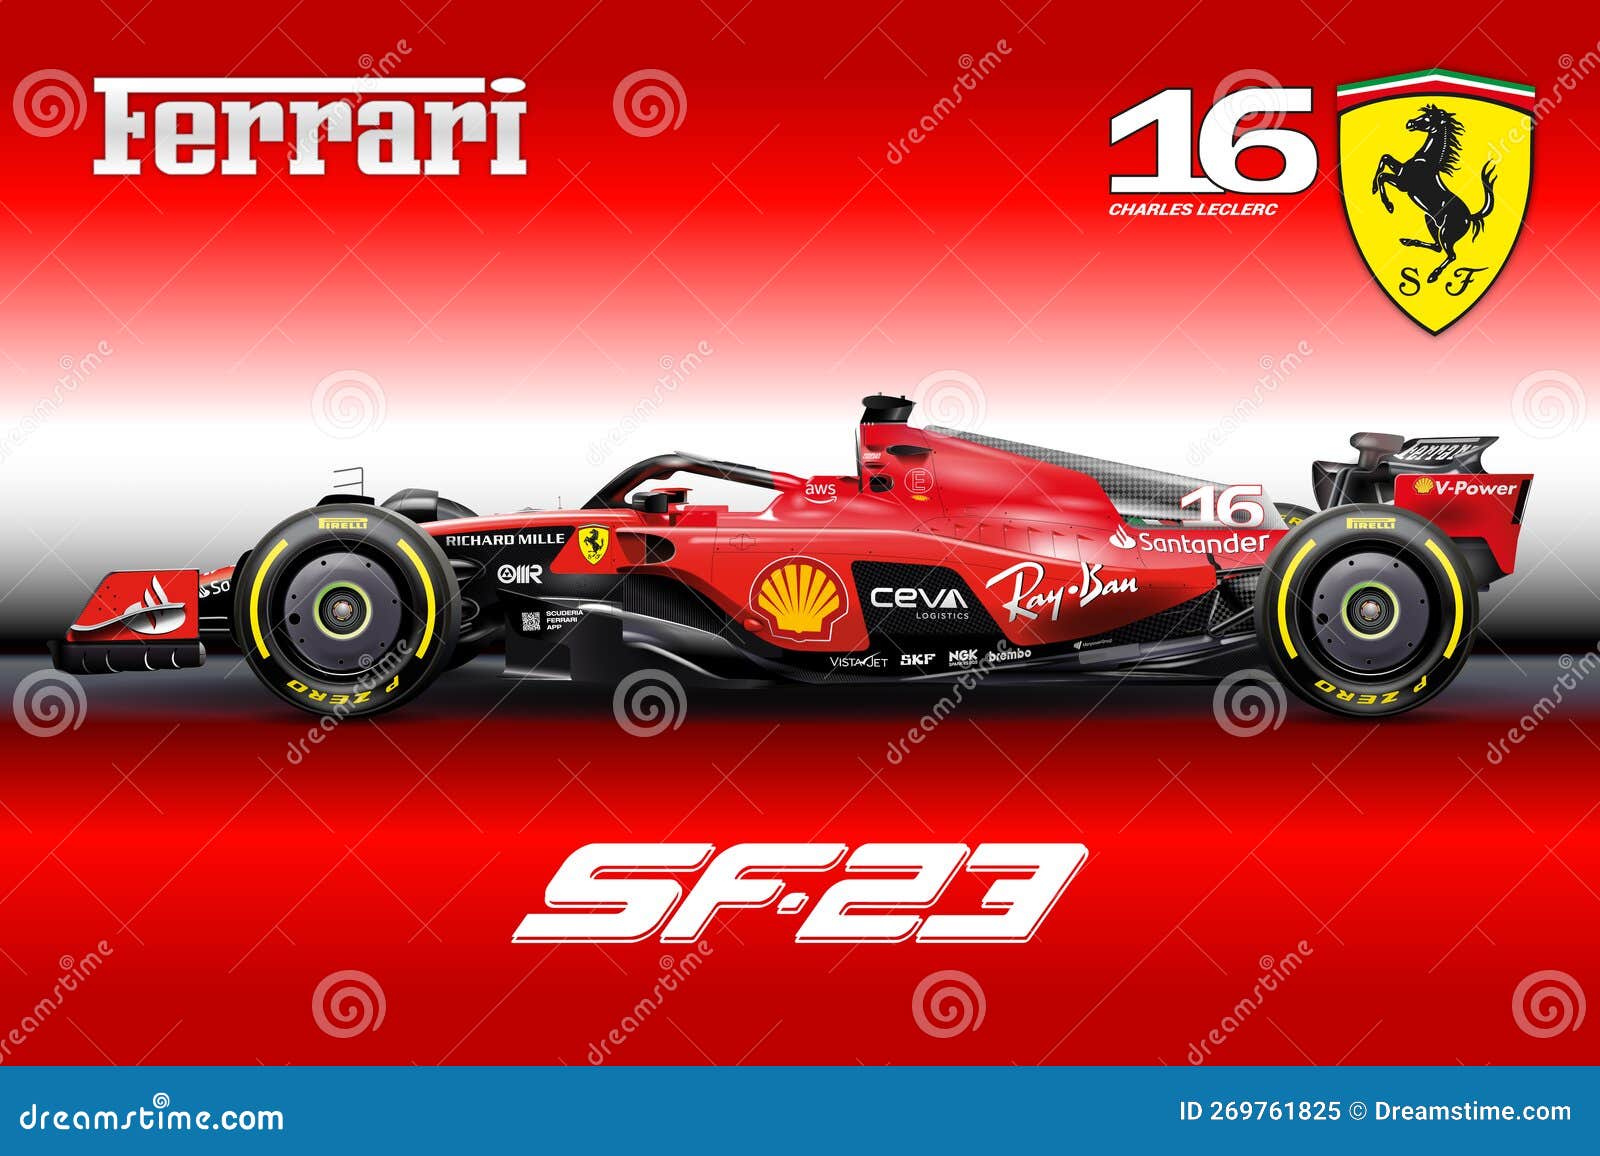 Ferrari Sf23 Formule 1 Charles Leclerc Numéro 16 Championnat F1